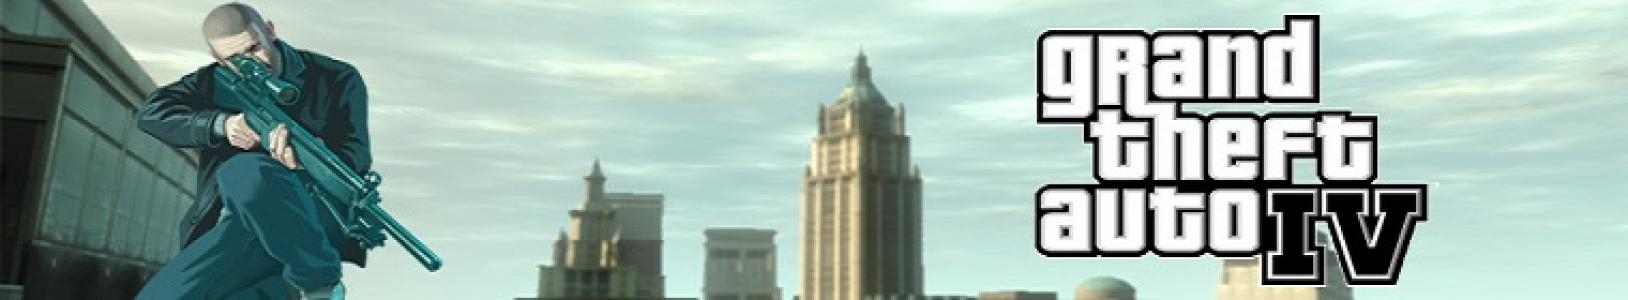 Grand Theft Auto IV banner